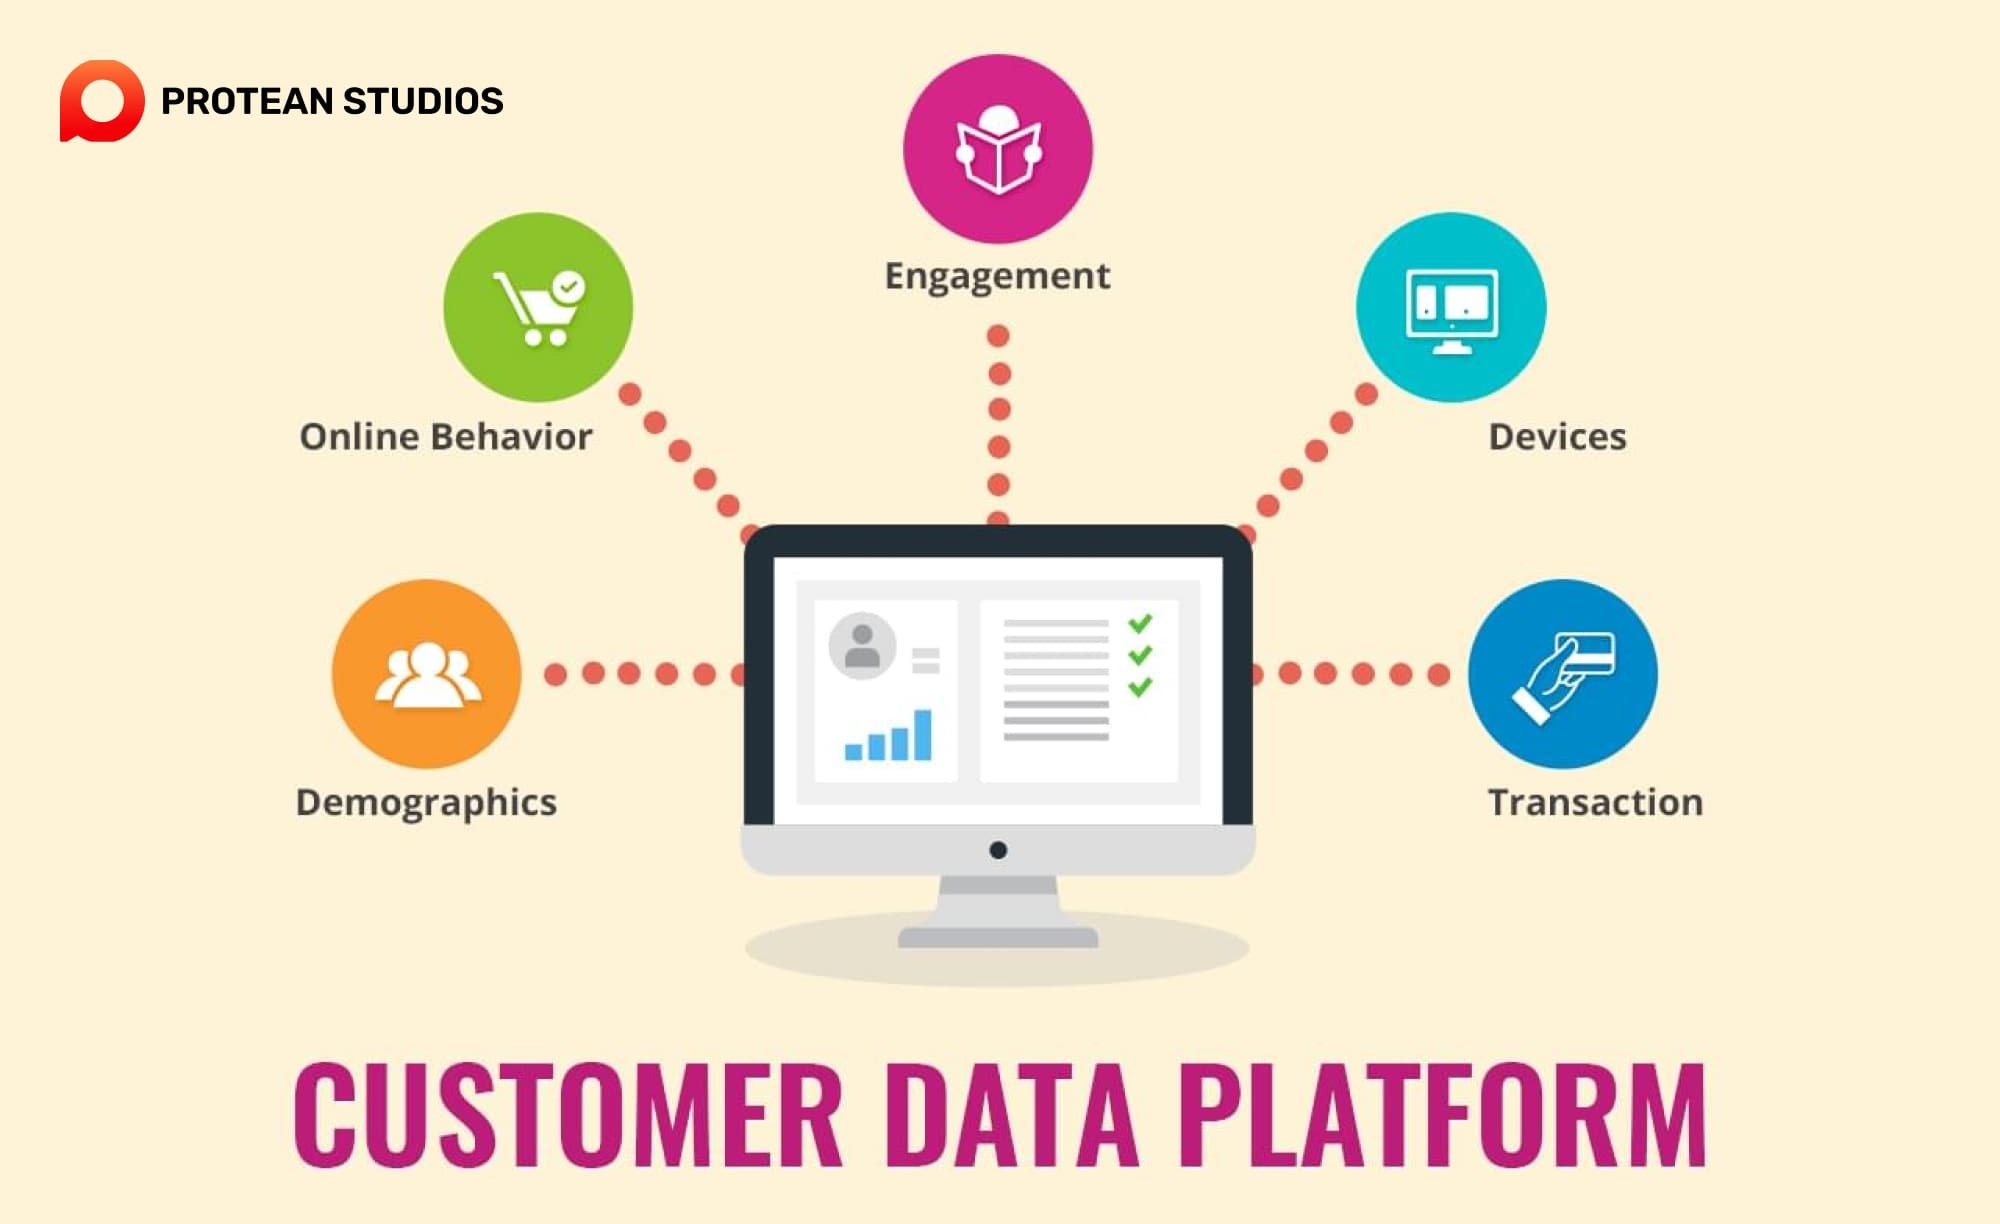 Features of customer data platforms